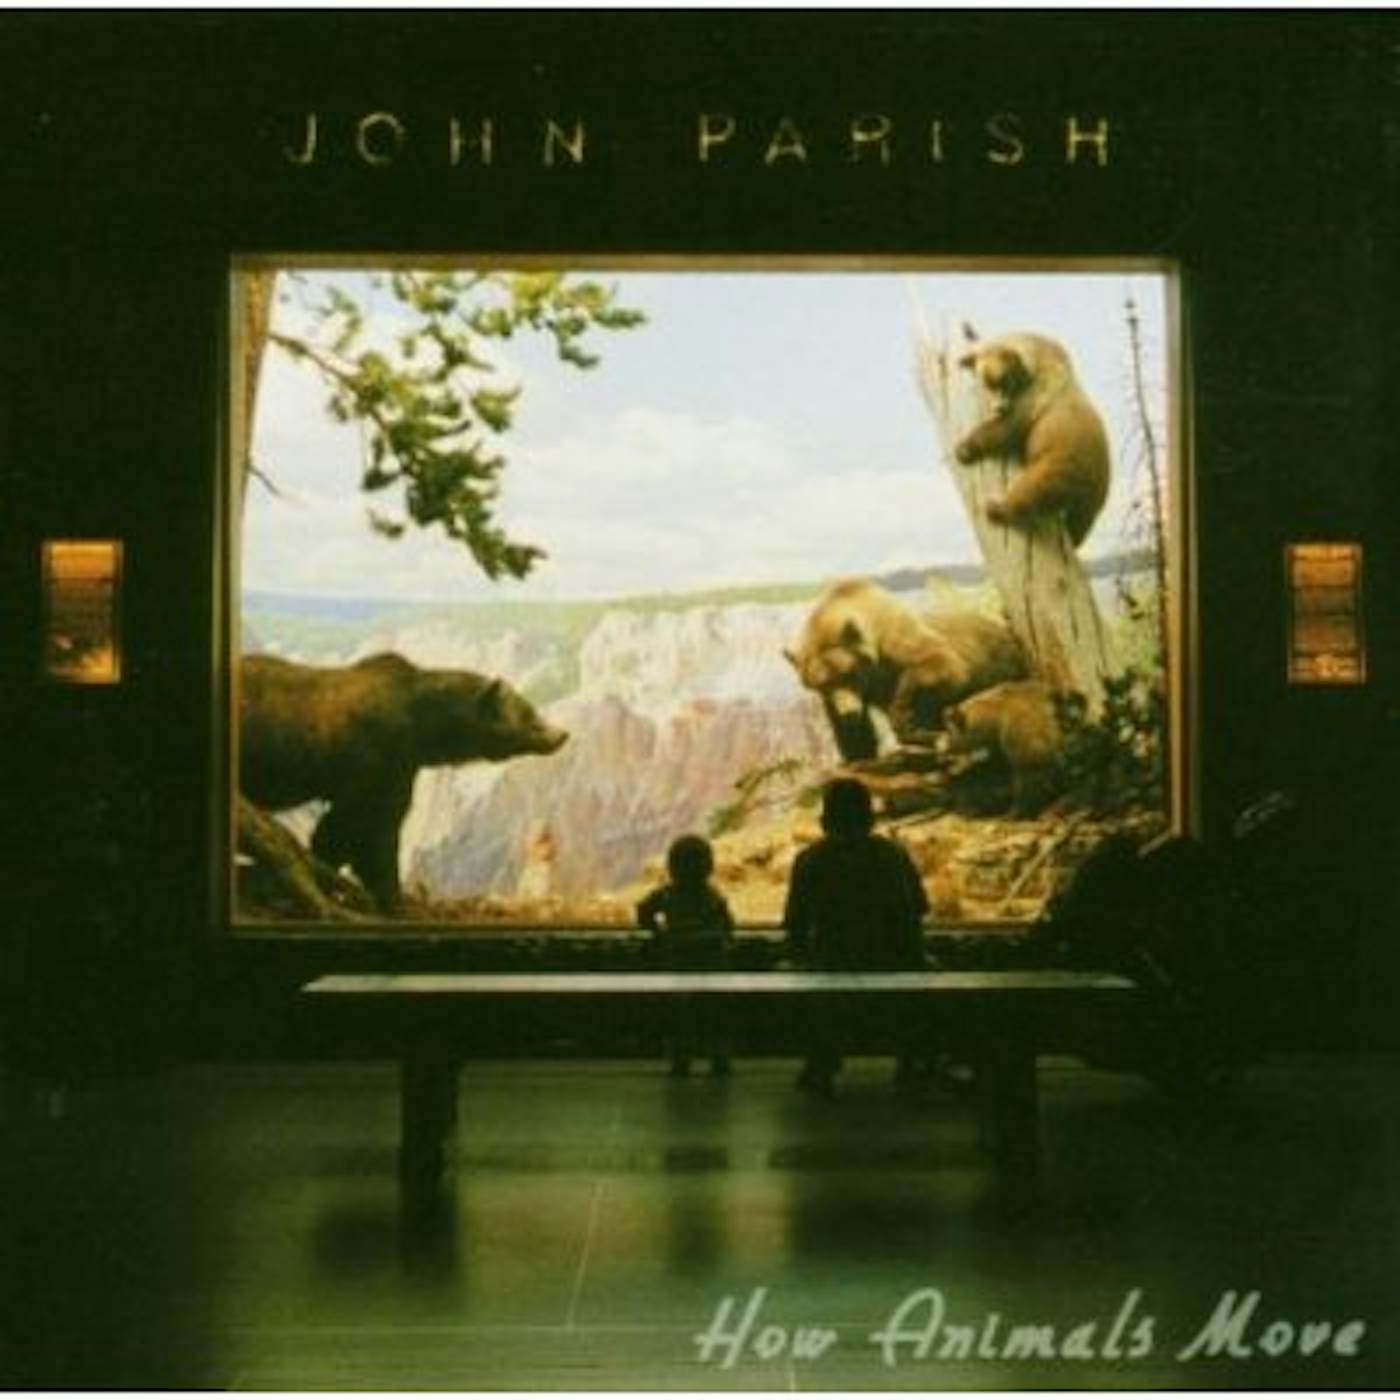 John Parish HOW ANIMALS MOVE CD